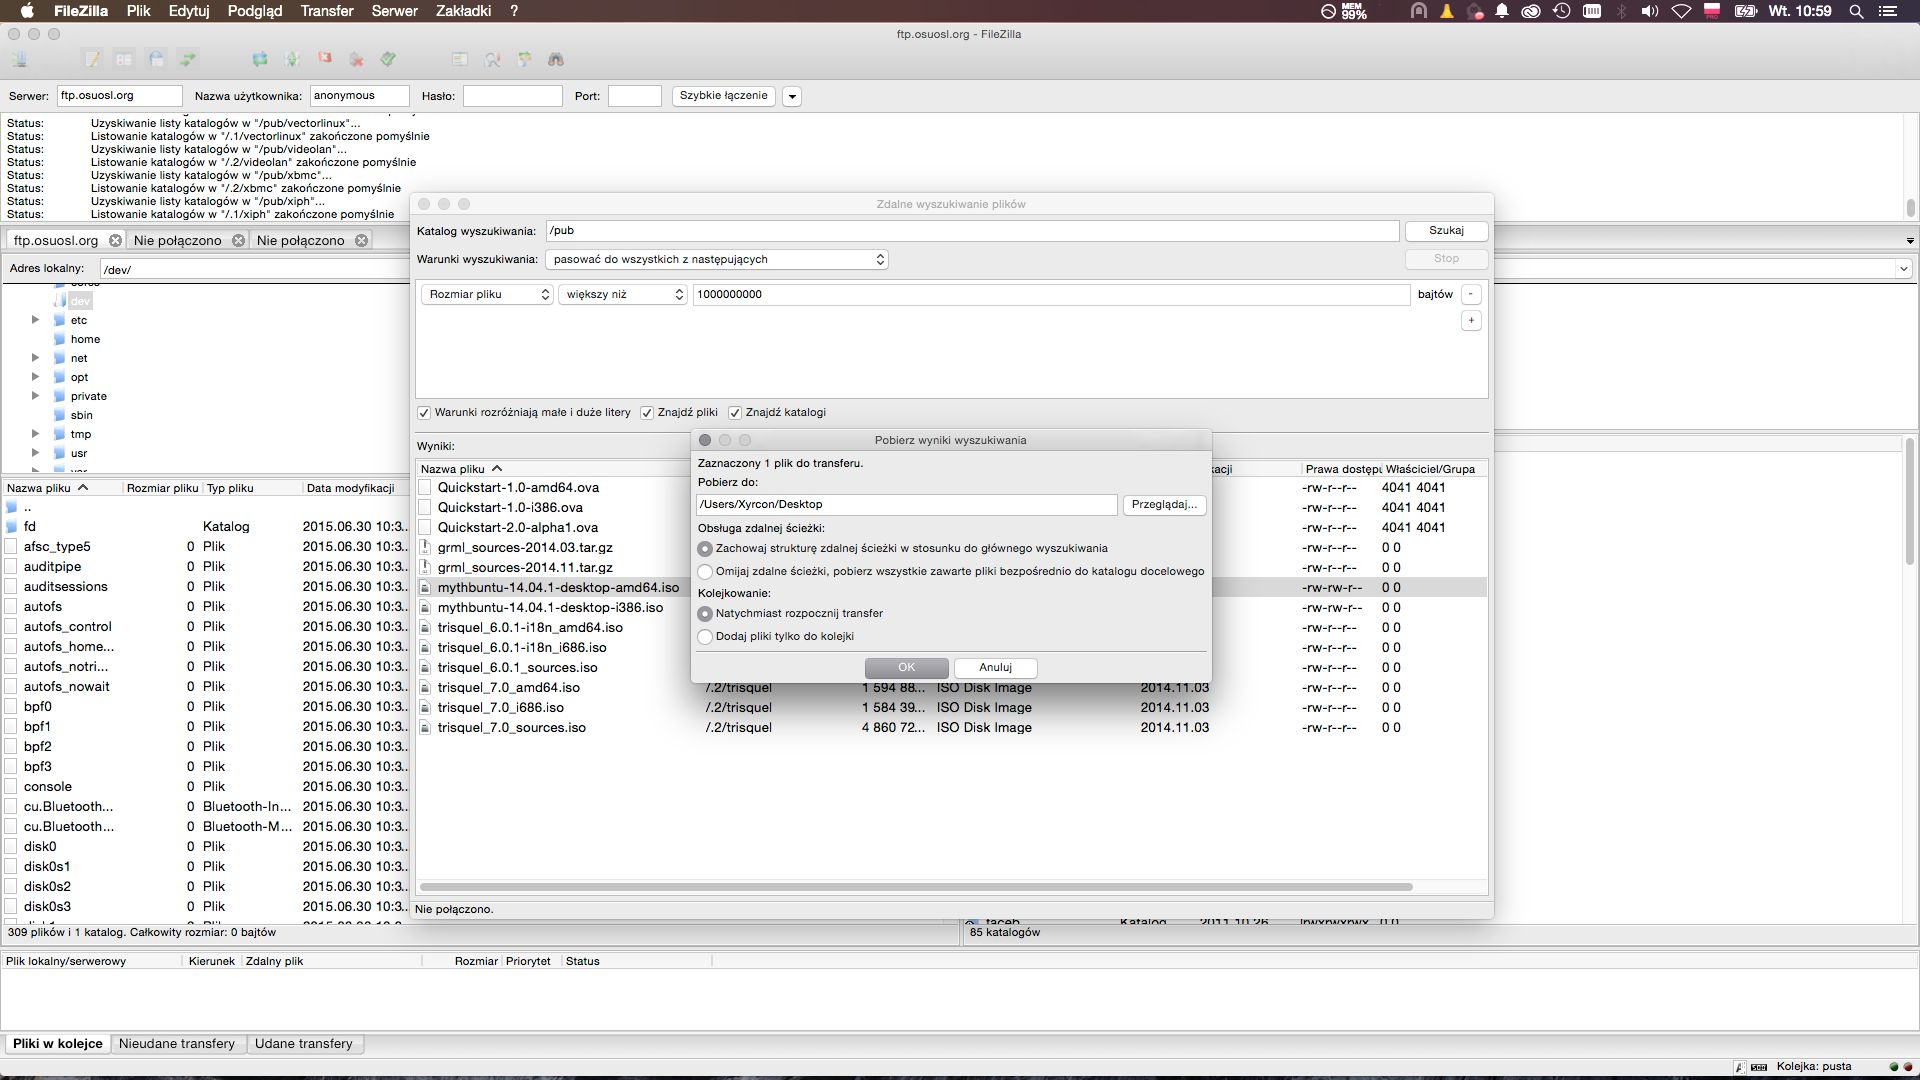 instal the last version for mac FileZilla 3.66.0 / Pro + Server